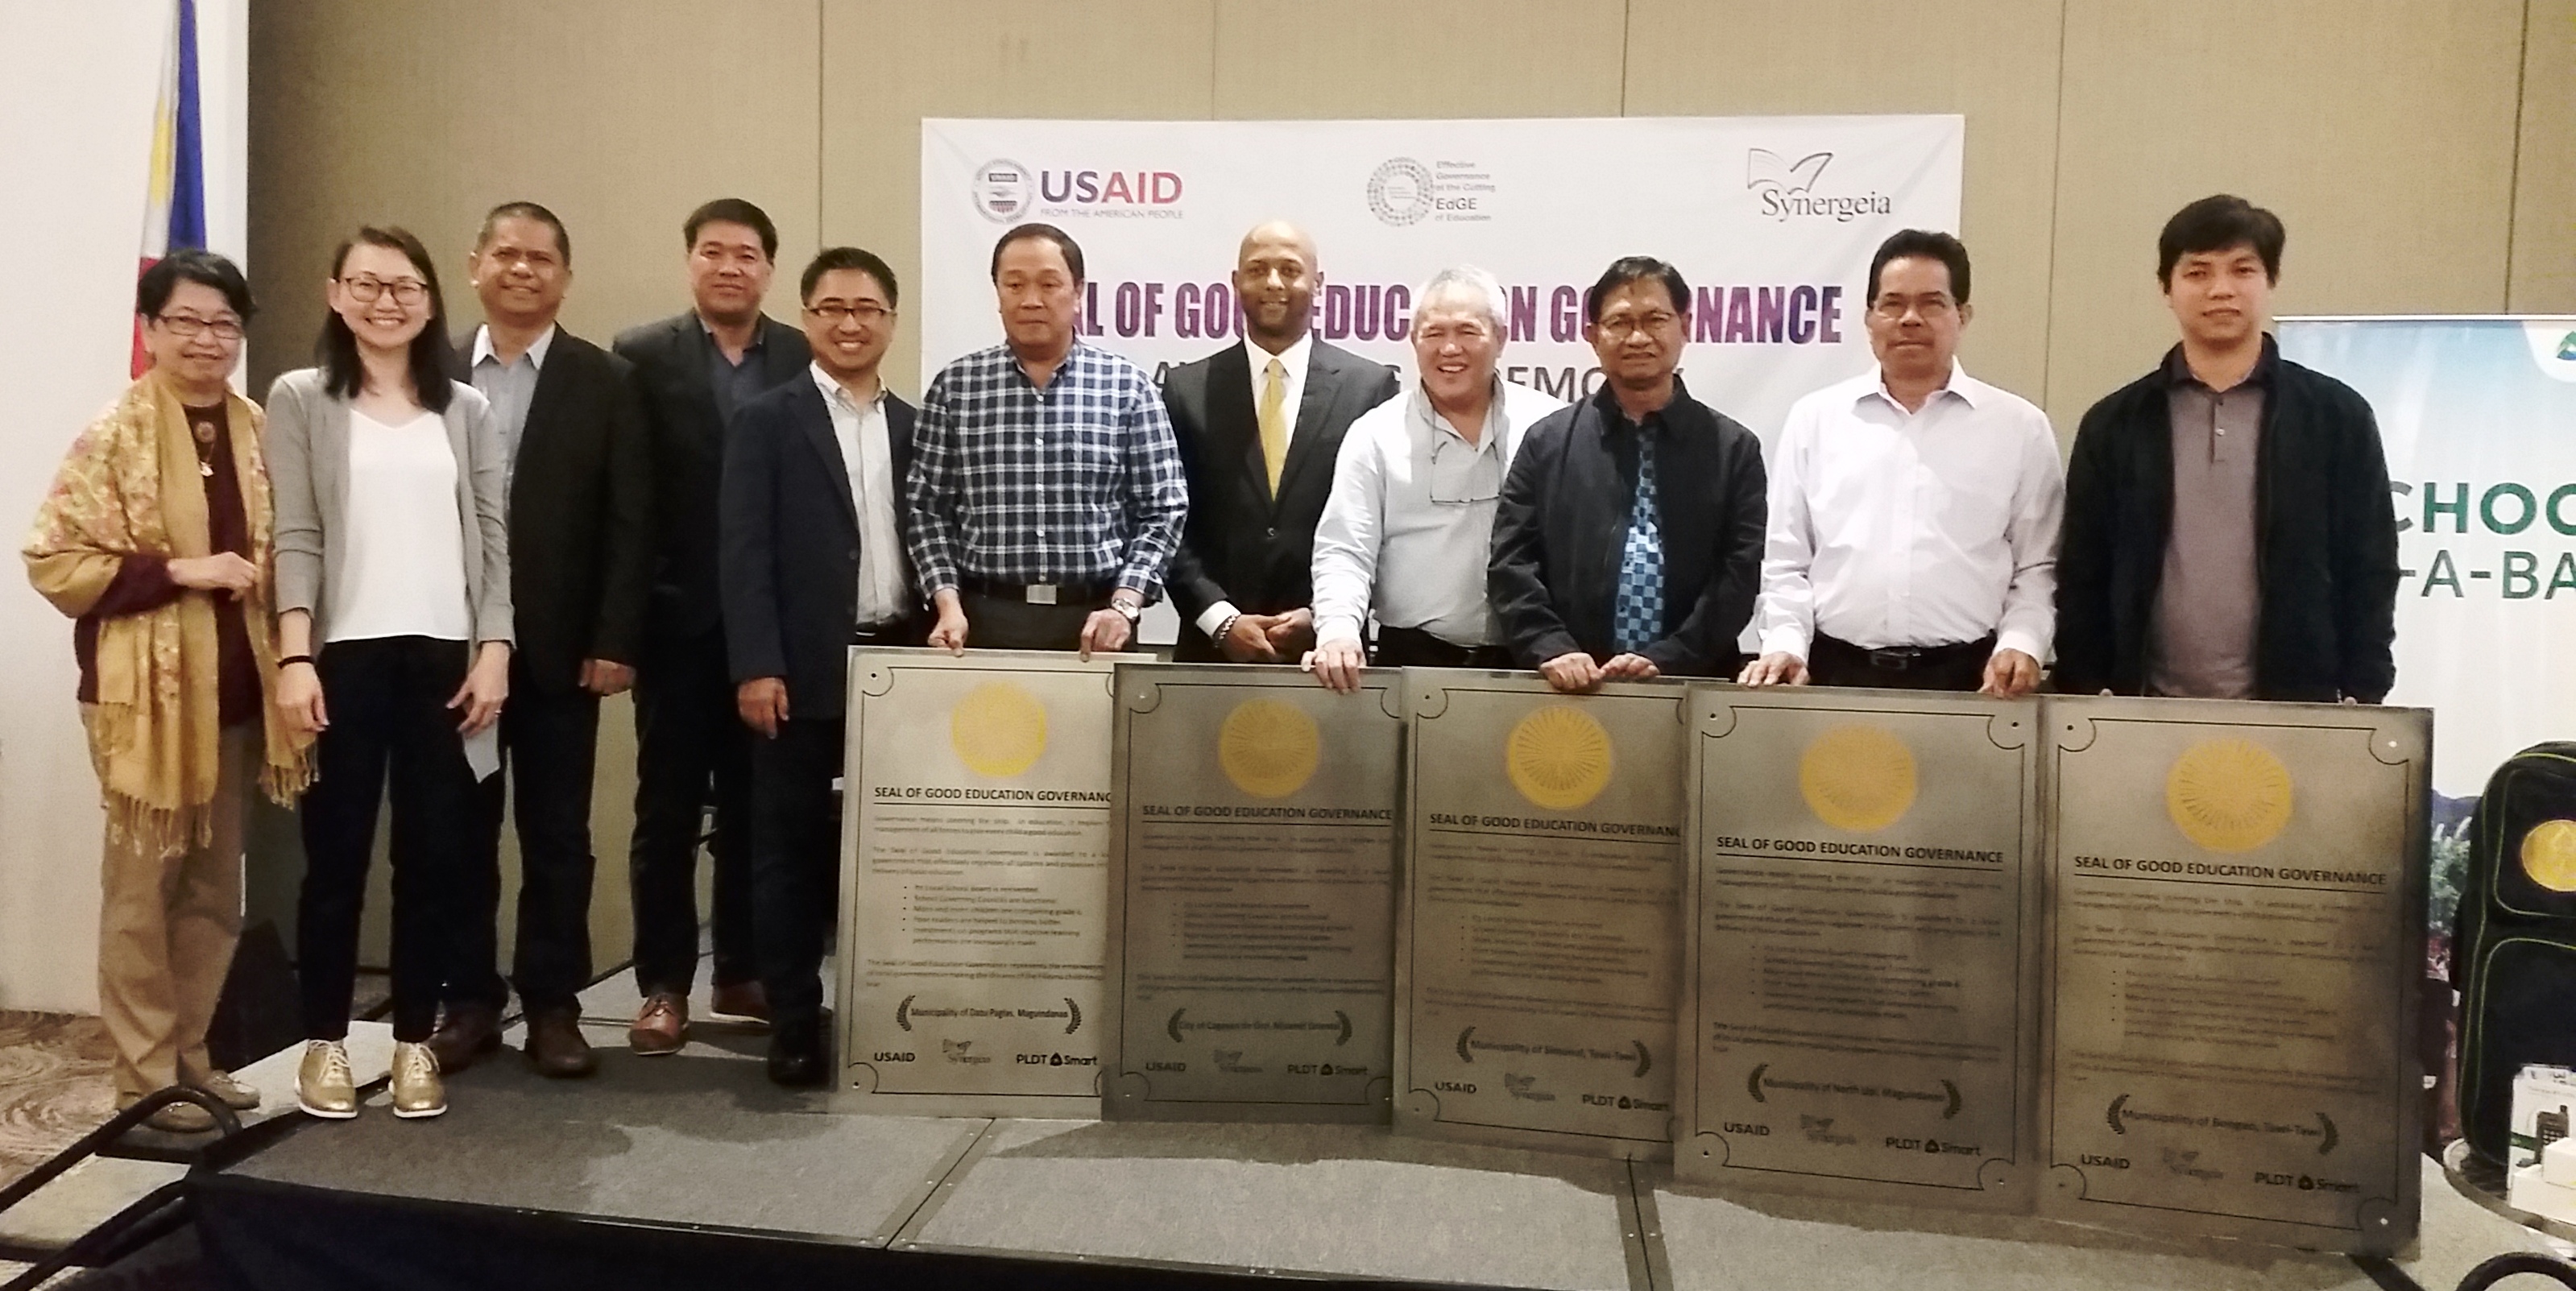 Awarding of the Seal of Good Education Governance to 5 Mindanao Winners